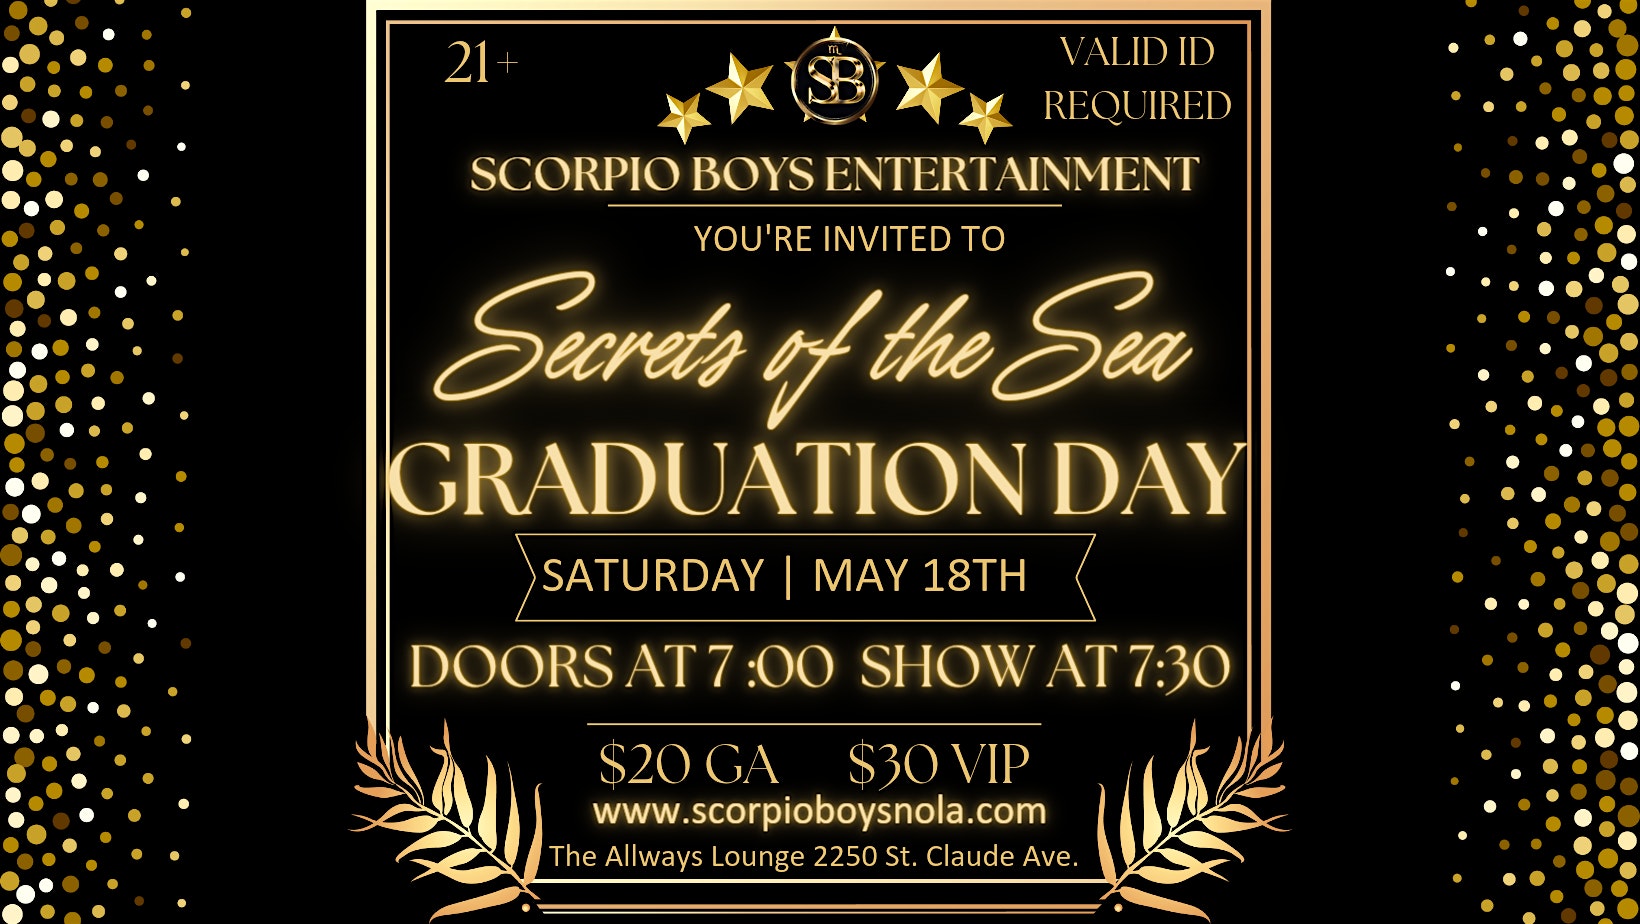 Secrets of the Sea - Graduation Day